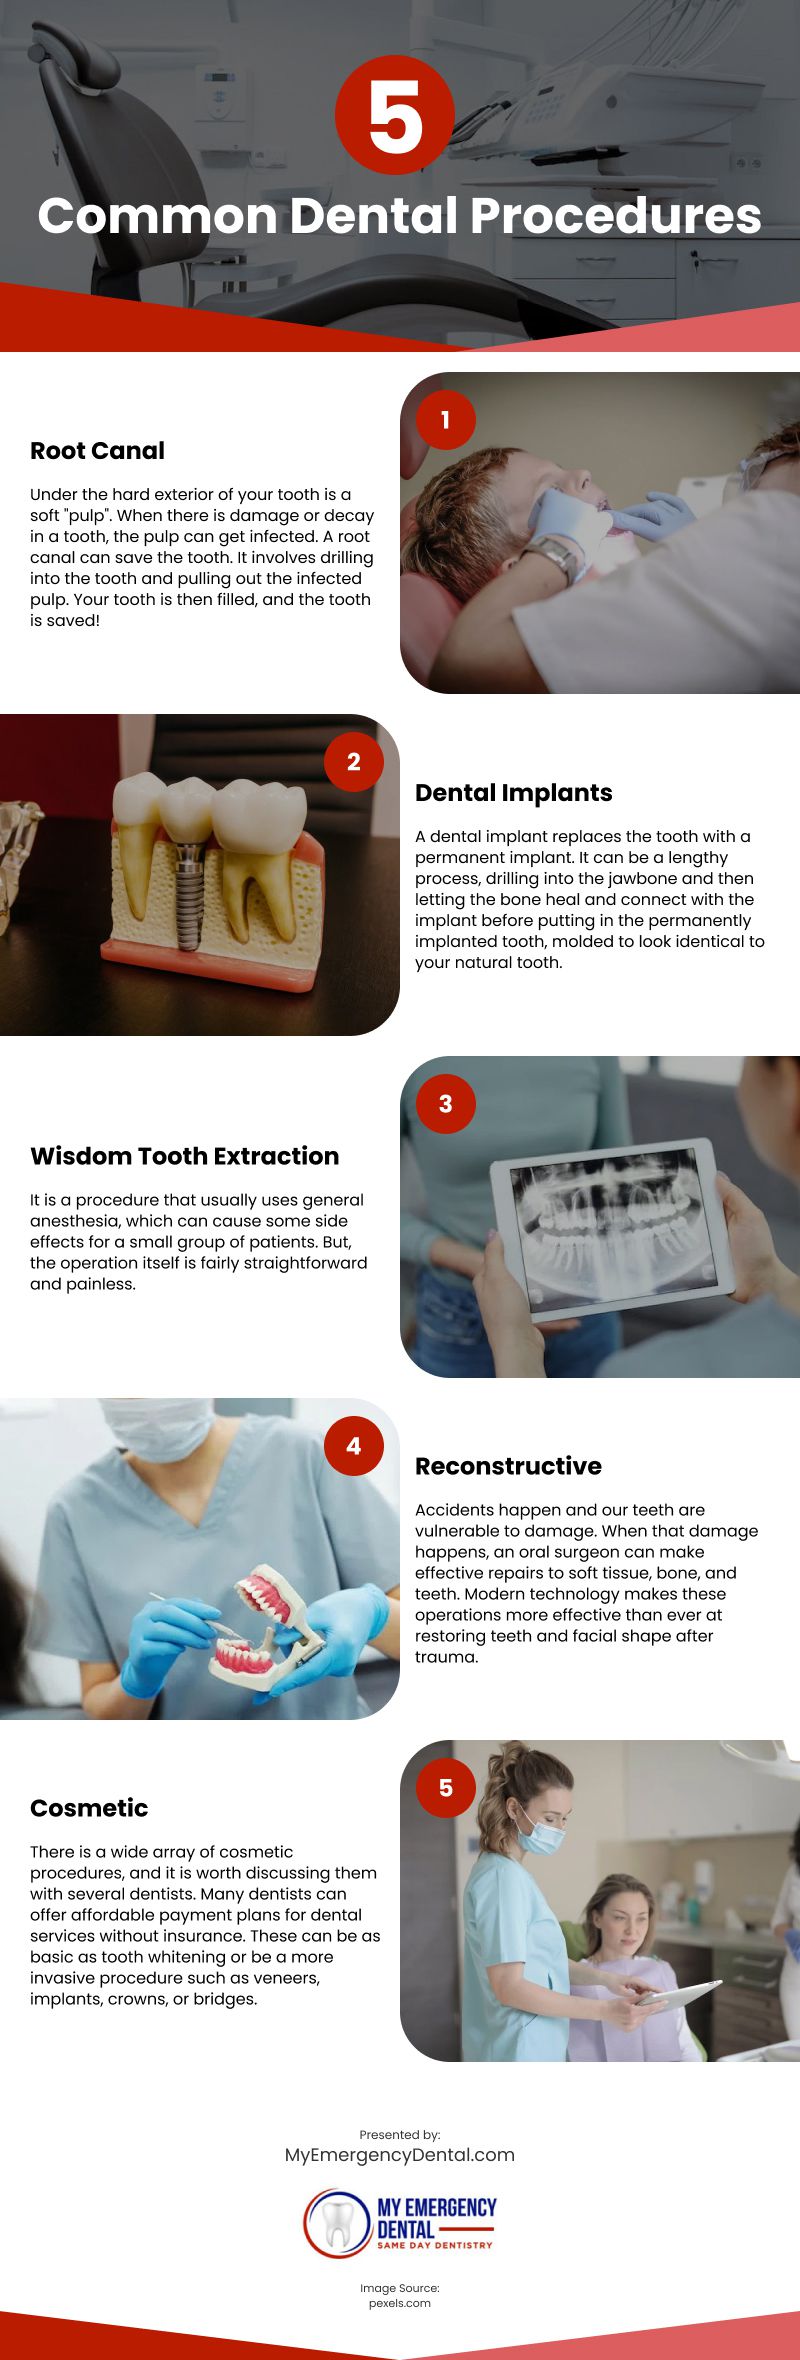 5 Common Dental Procedures Infographic